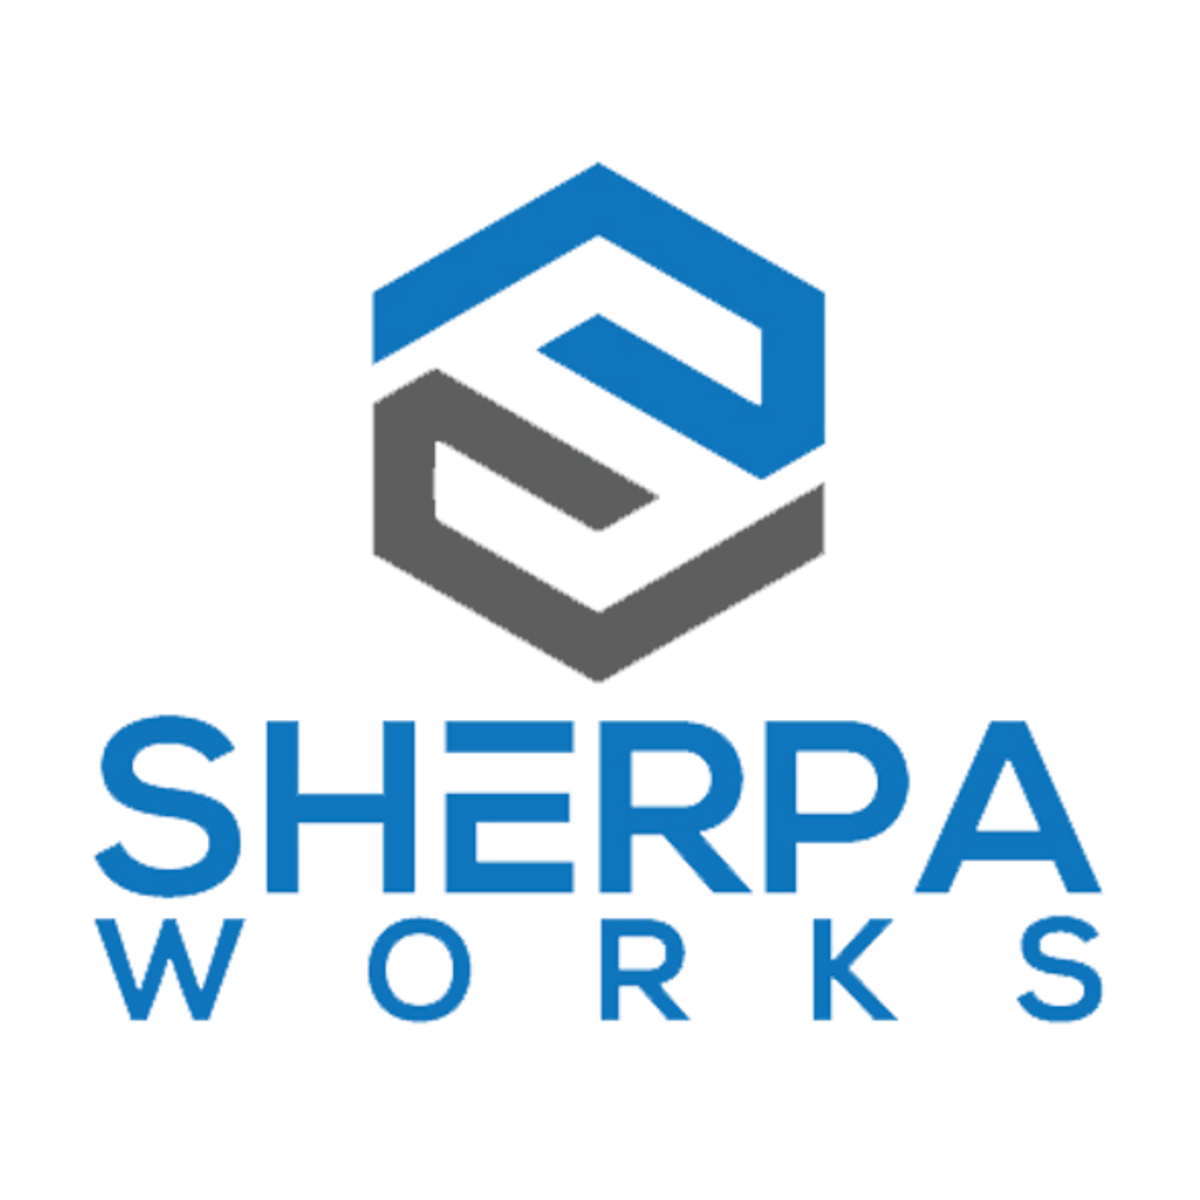 crossover health sherpaa